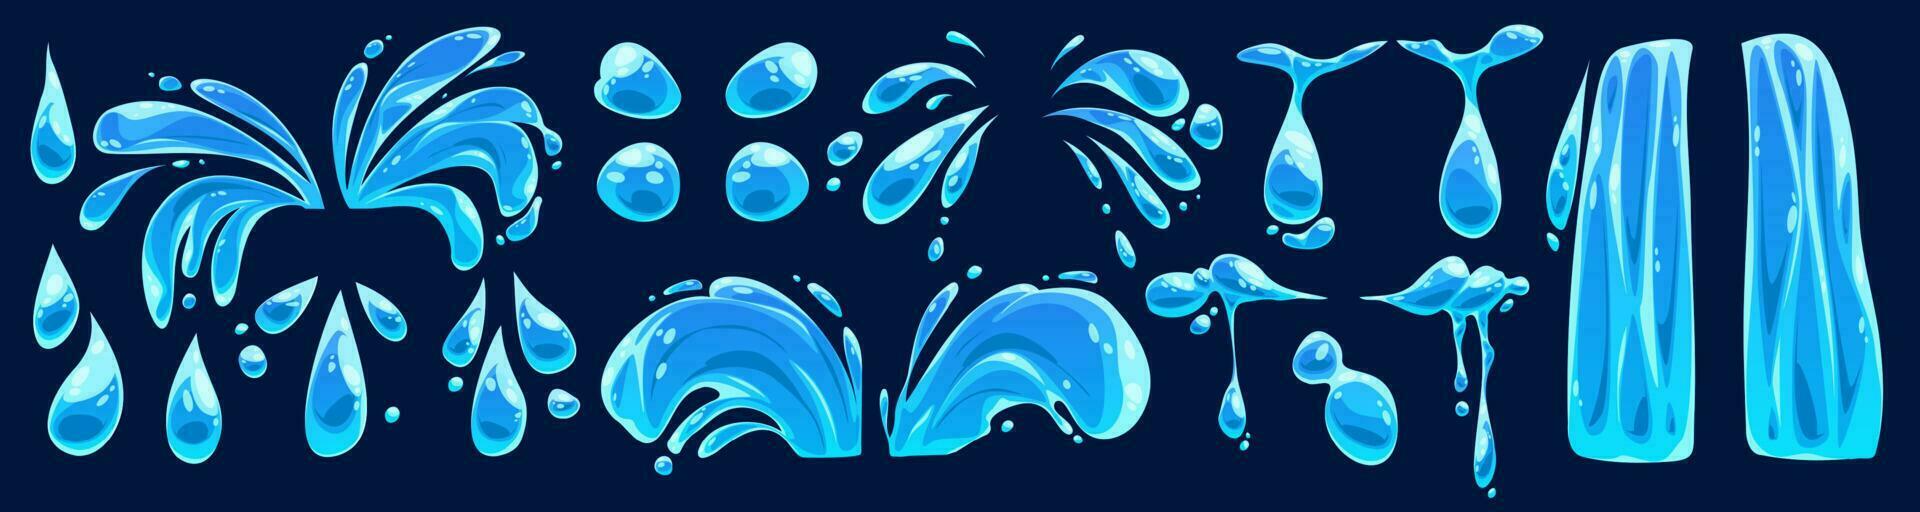 Cartoon water tear vector icon set, liquid graphic